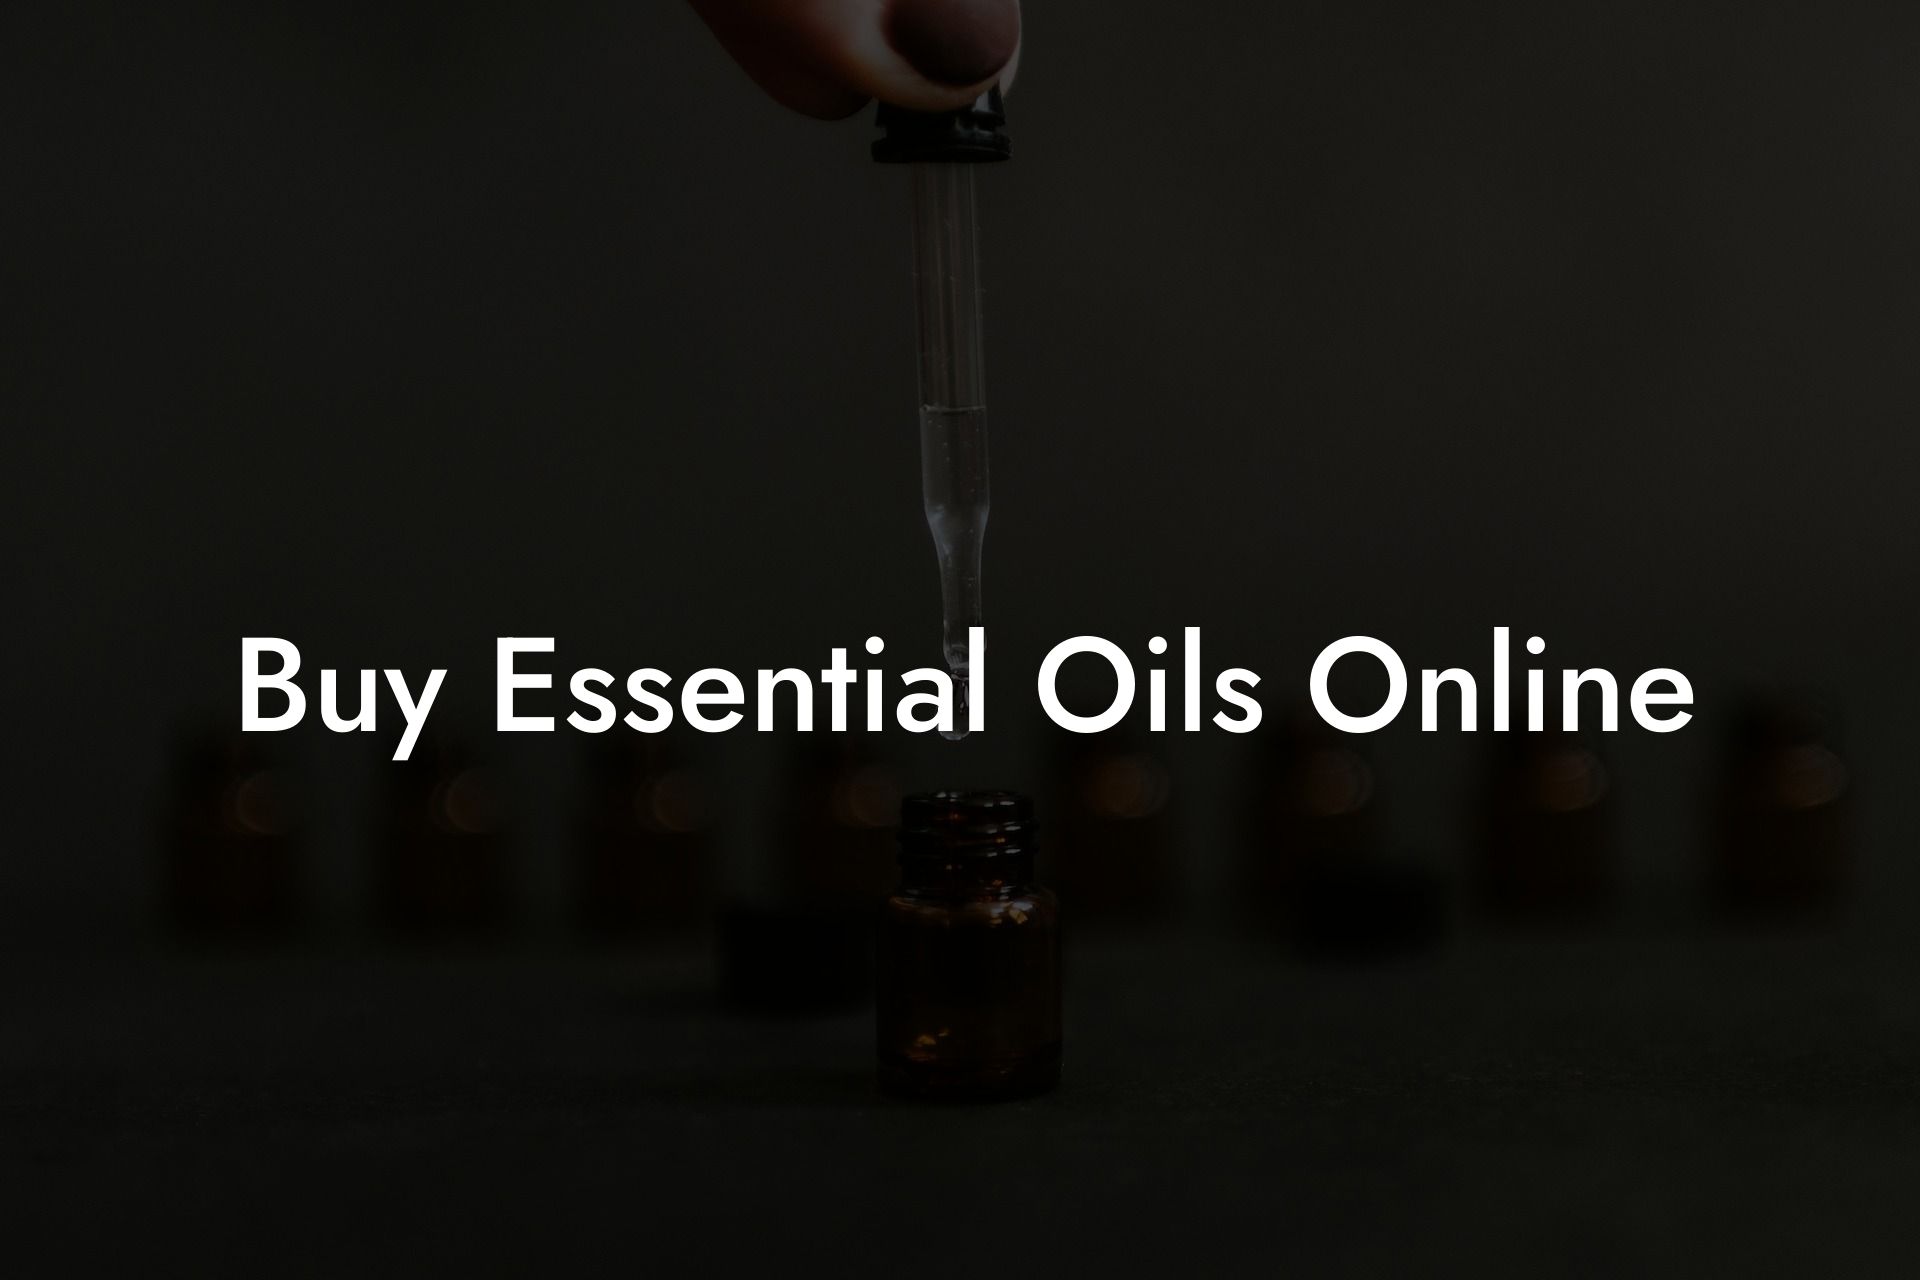 Buy Essential Oils Online